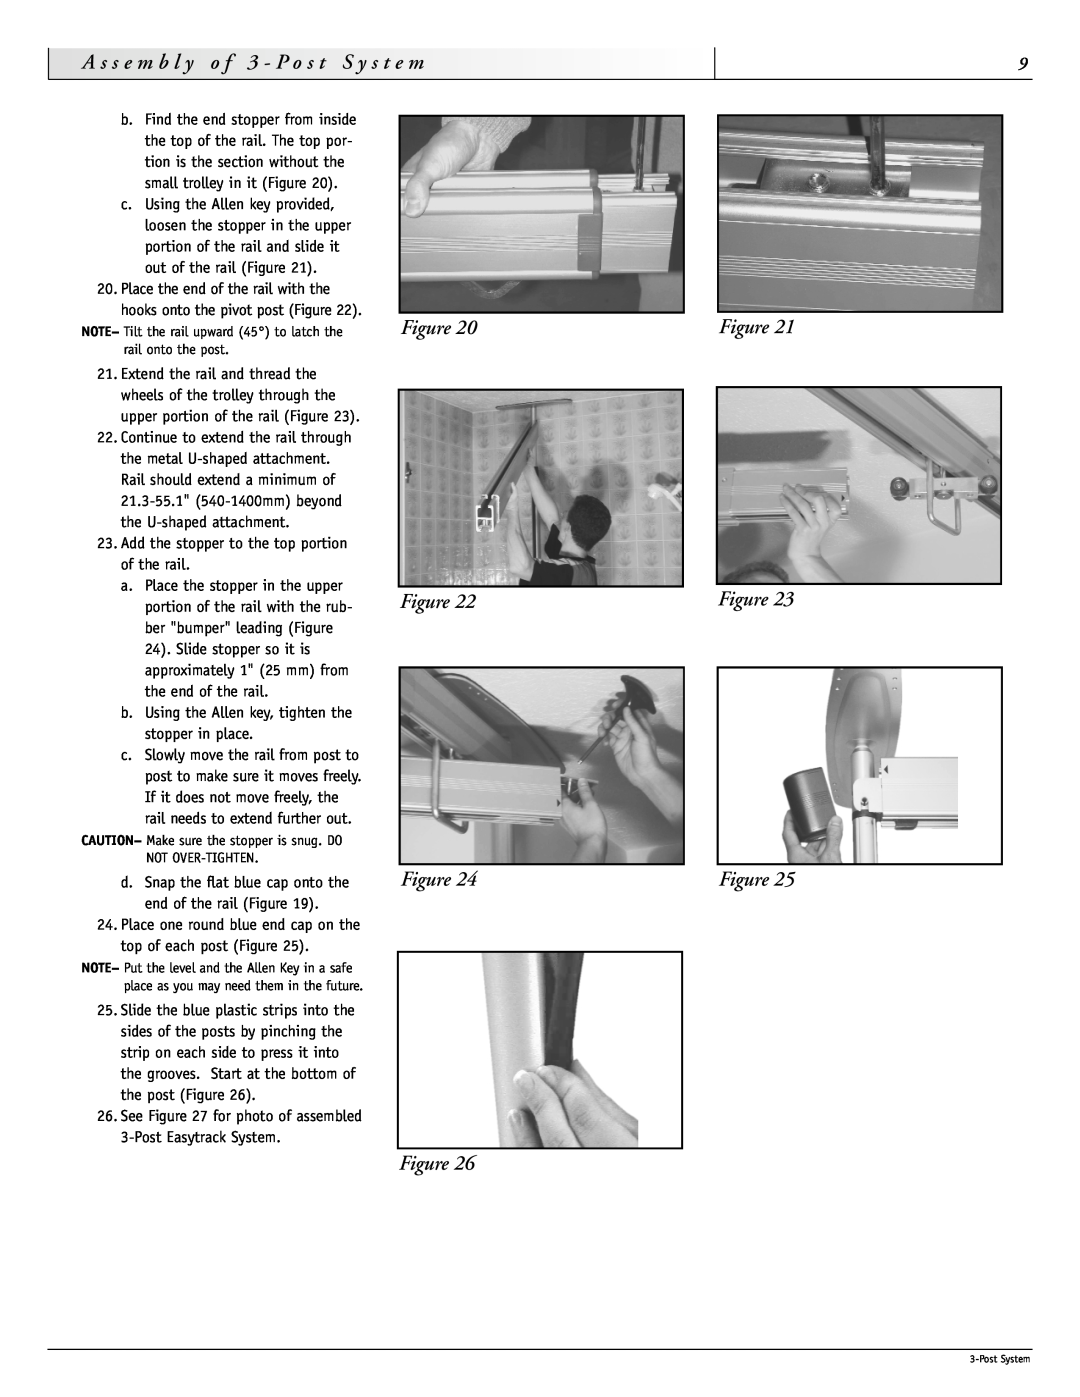 Sunrise Medical 93000 instruction manual Figure Figure Figure Figure, A s s e m b l y o f 3 - P o s t S y s t e m 